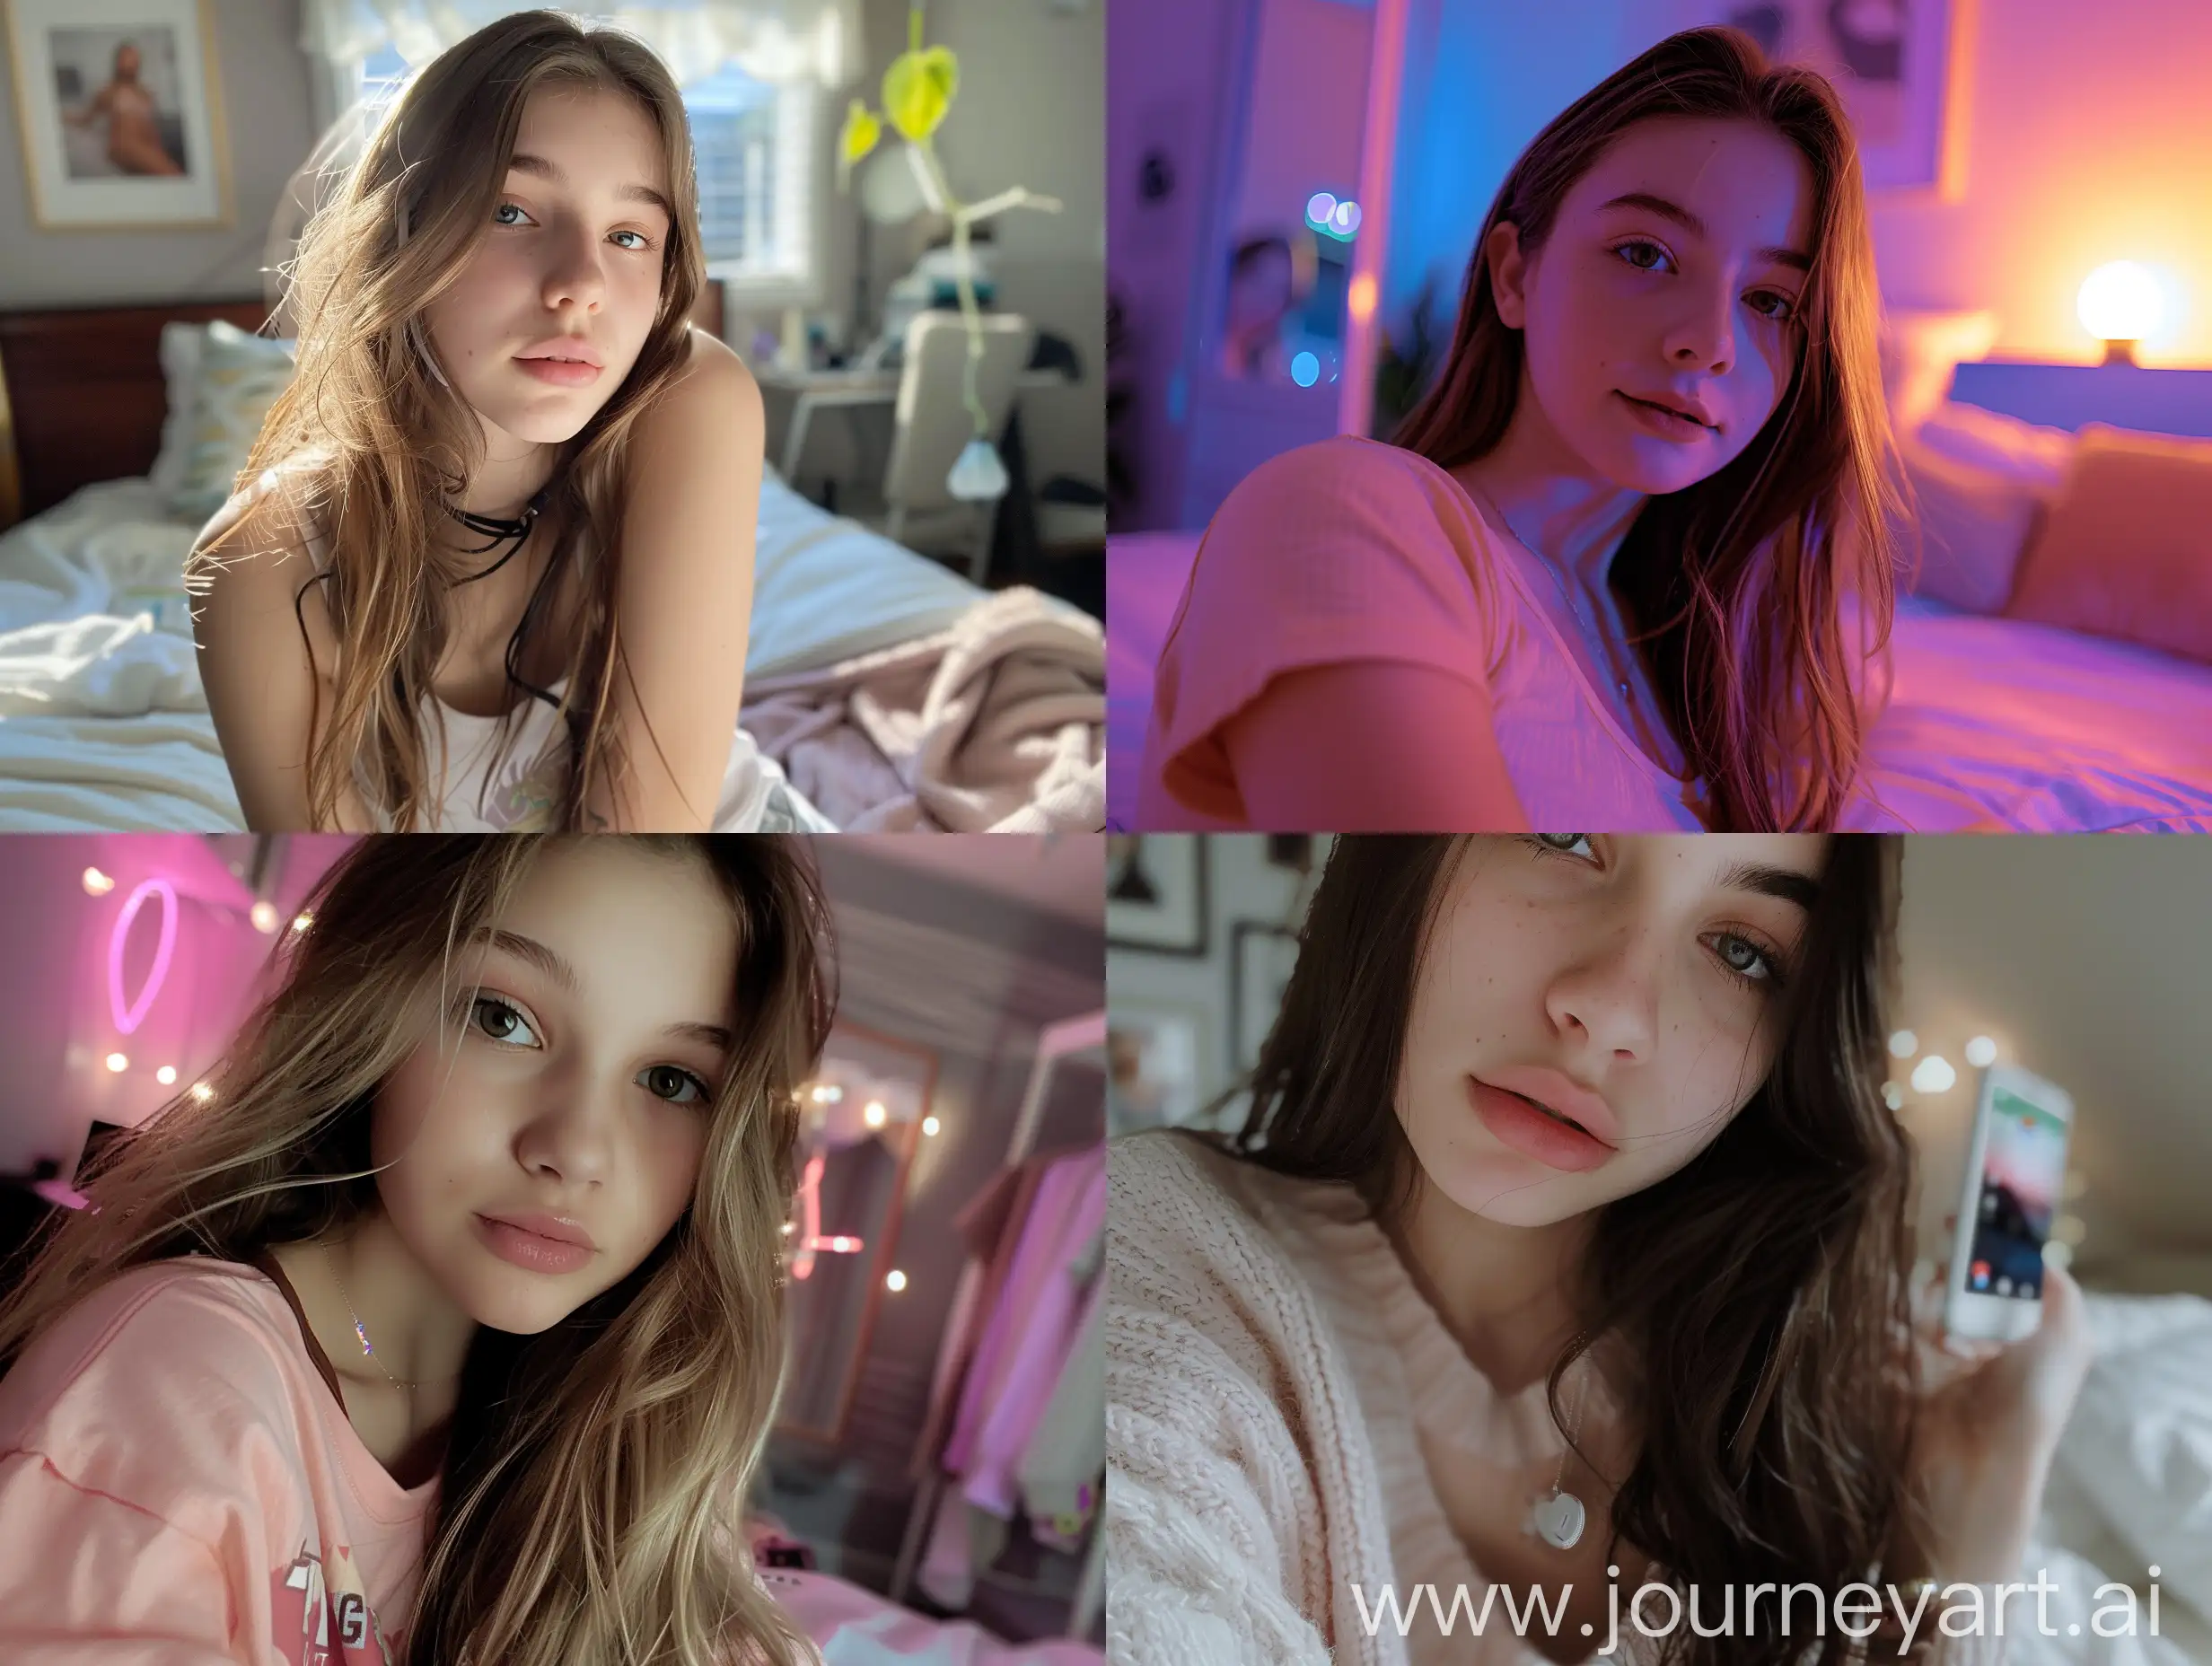 Photo taken on iPhone, teenage girl influencer, Tiktok star, in bedroom, realistic lighting, close up, selfie, girly